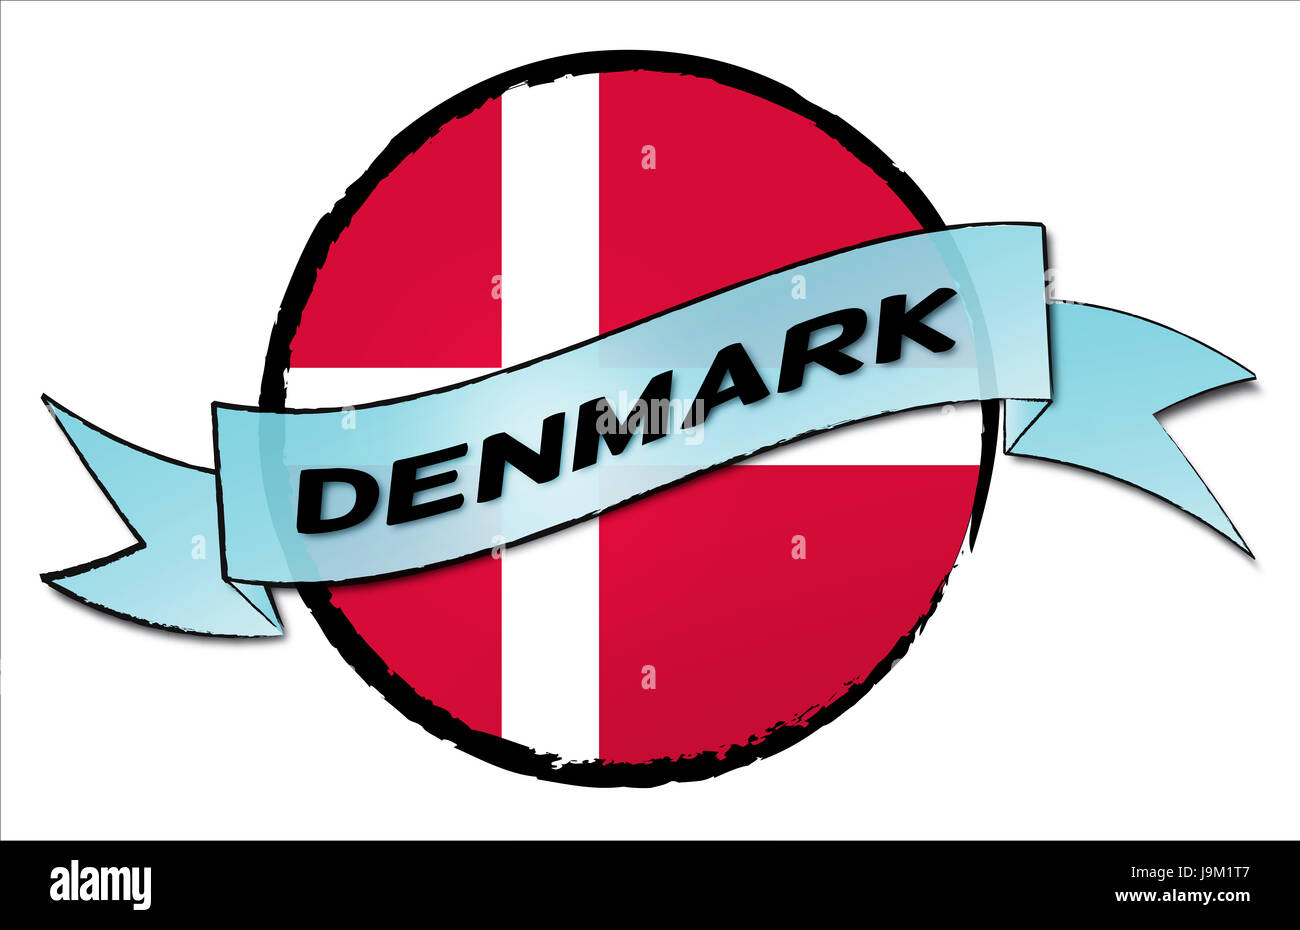 denmark, copenhagen, denmark, flag, trip, button, banner, copenhagen, country, Stock Photo